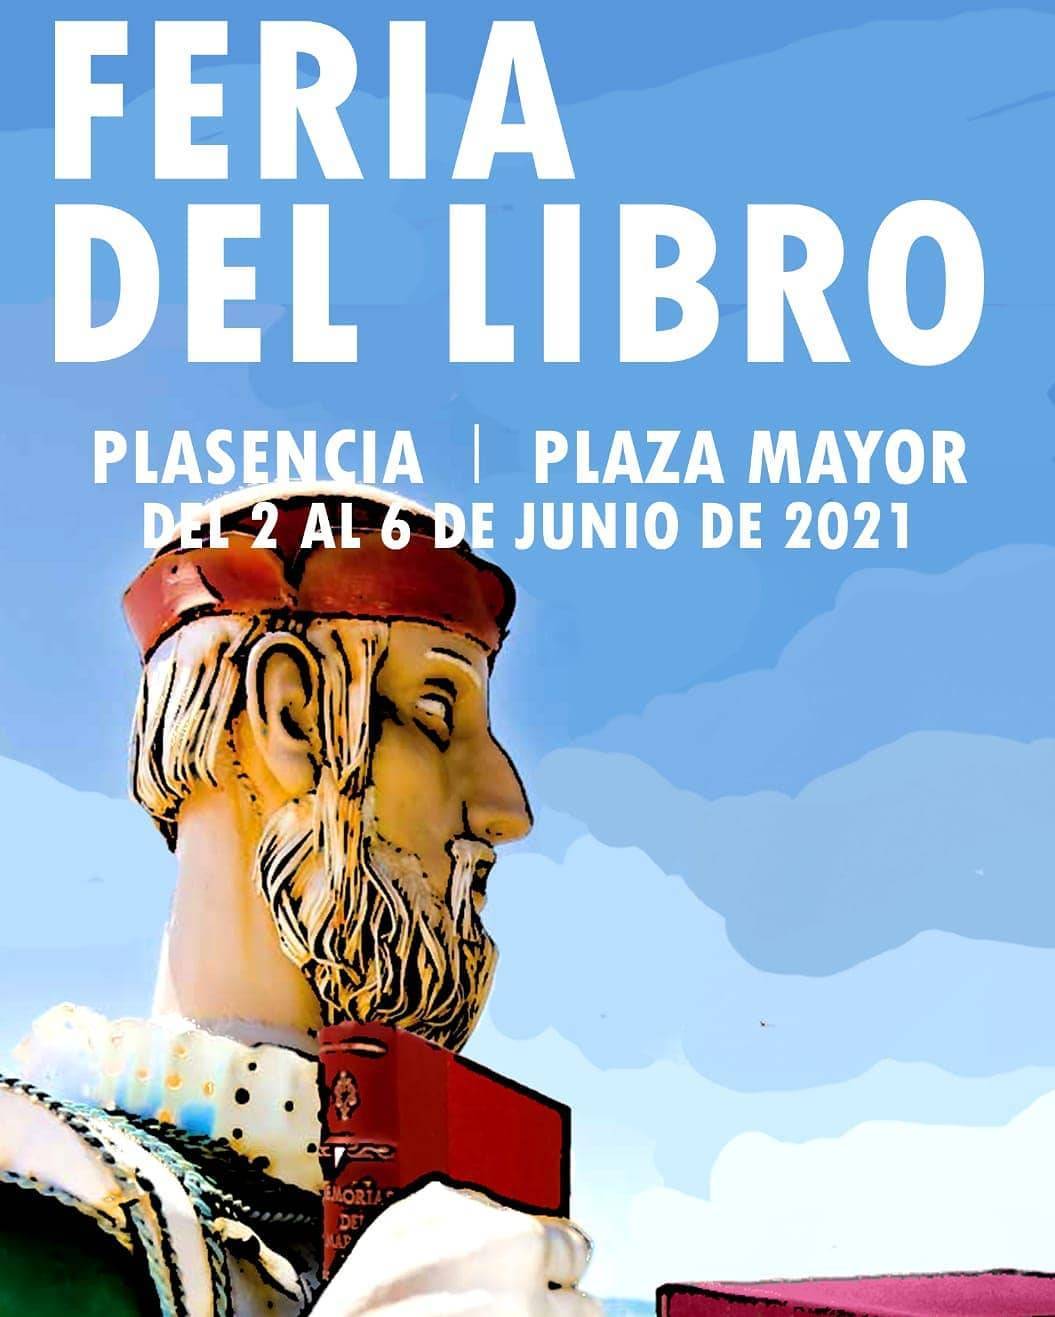 Feria del libro (2021) - Plasencia (Cáceres)